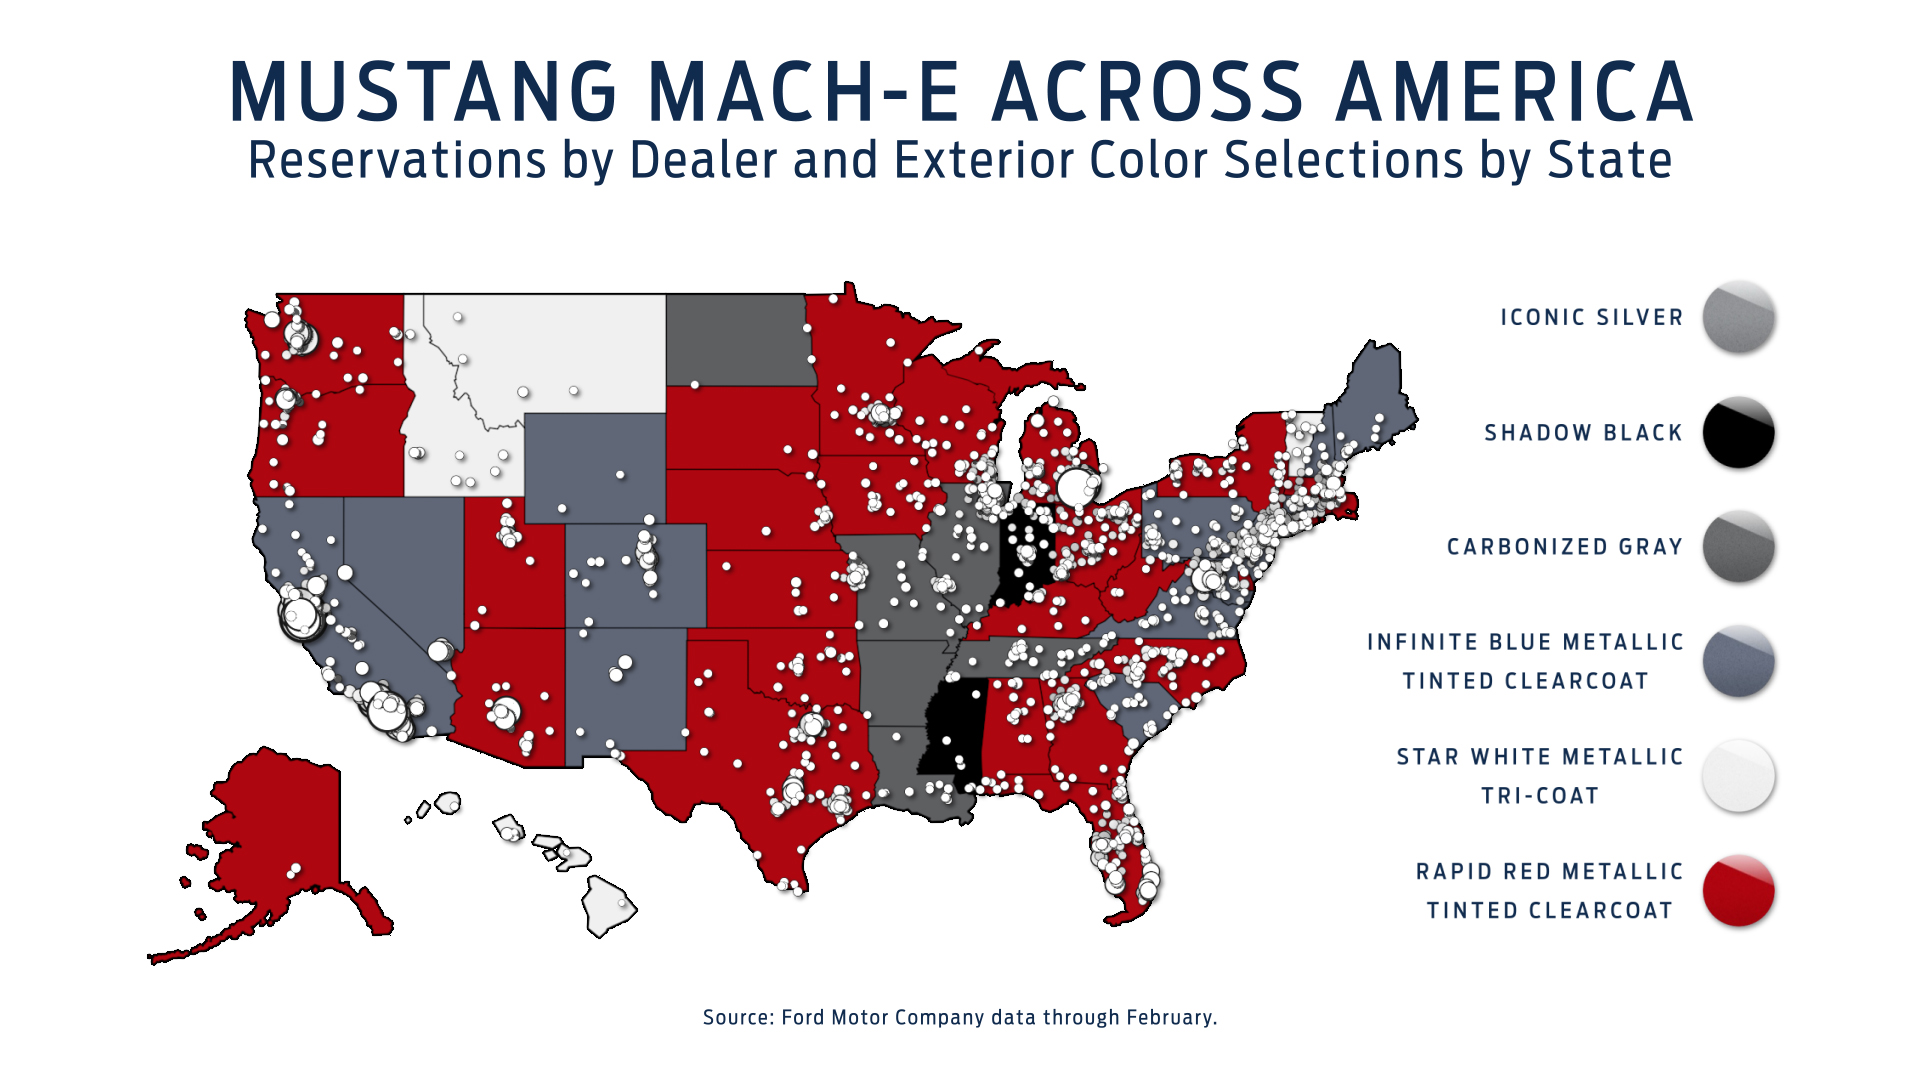 Mustang Mach-E Across America Infographic